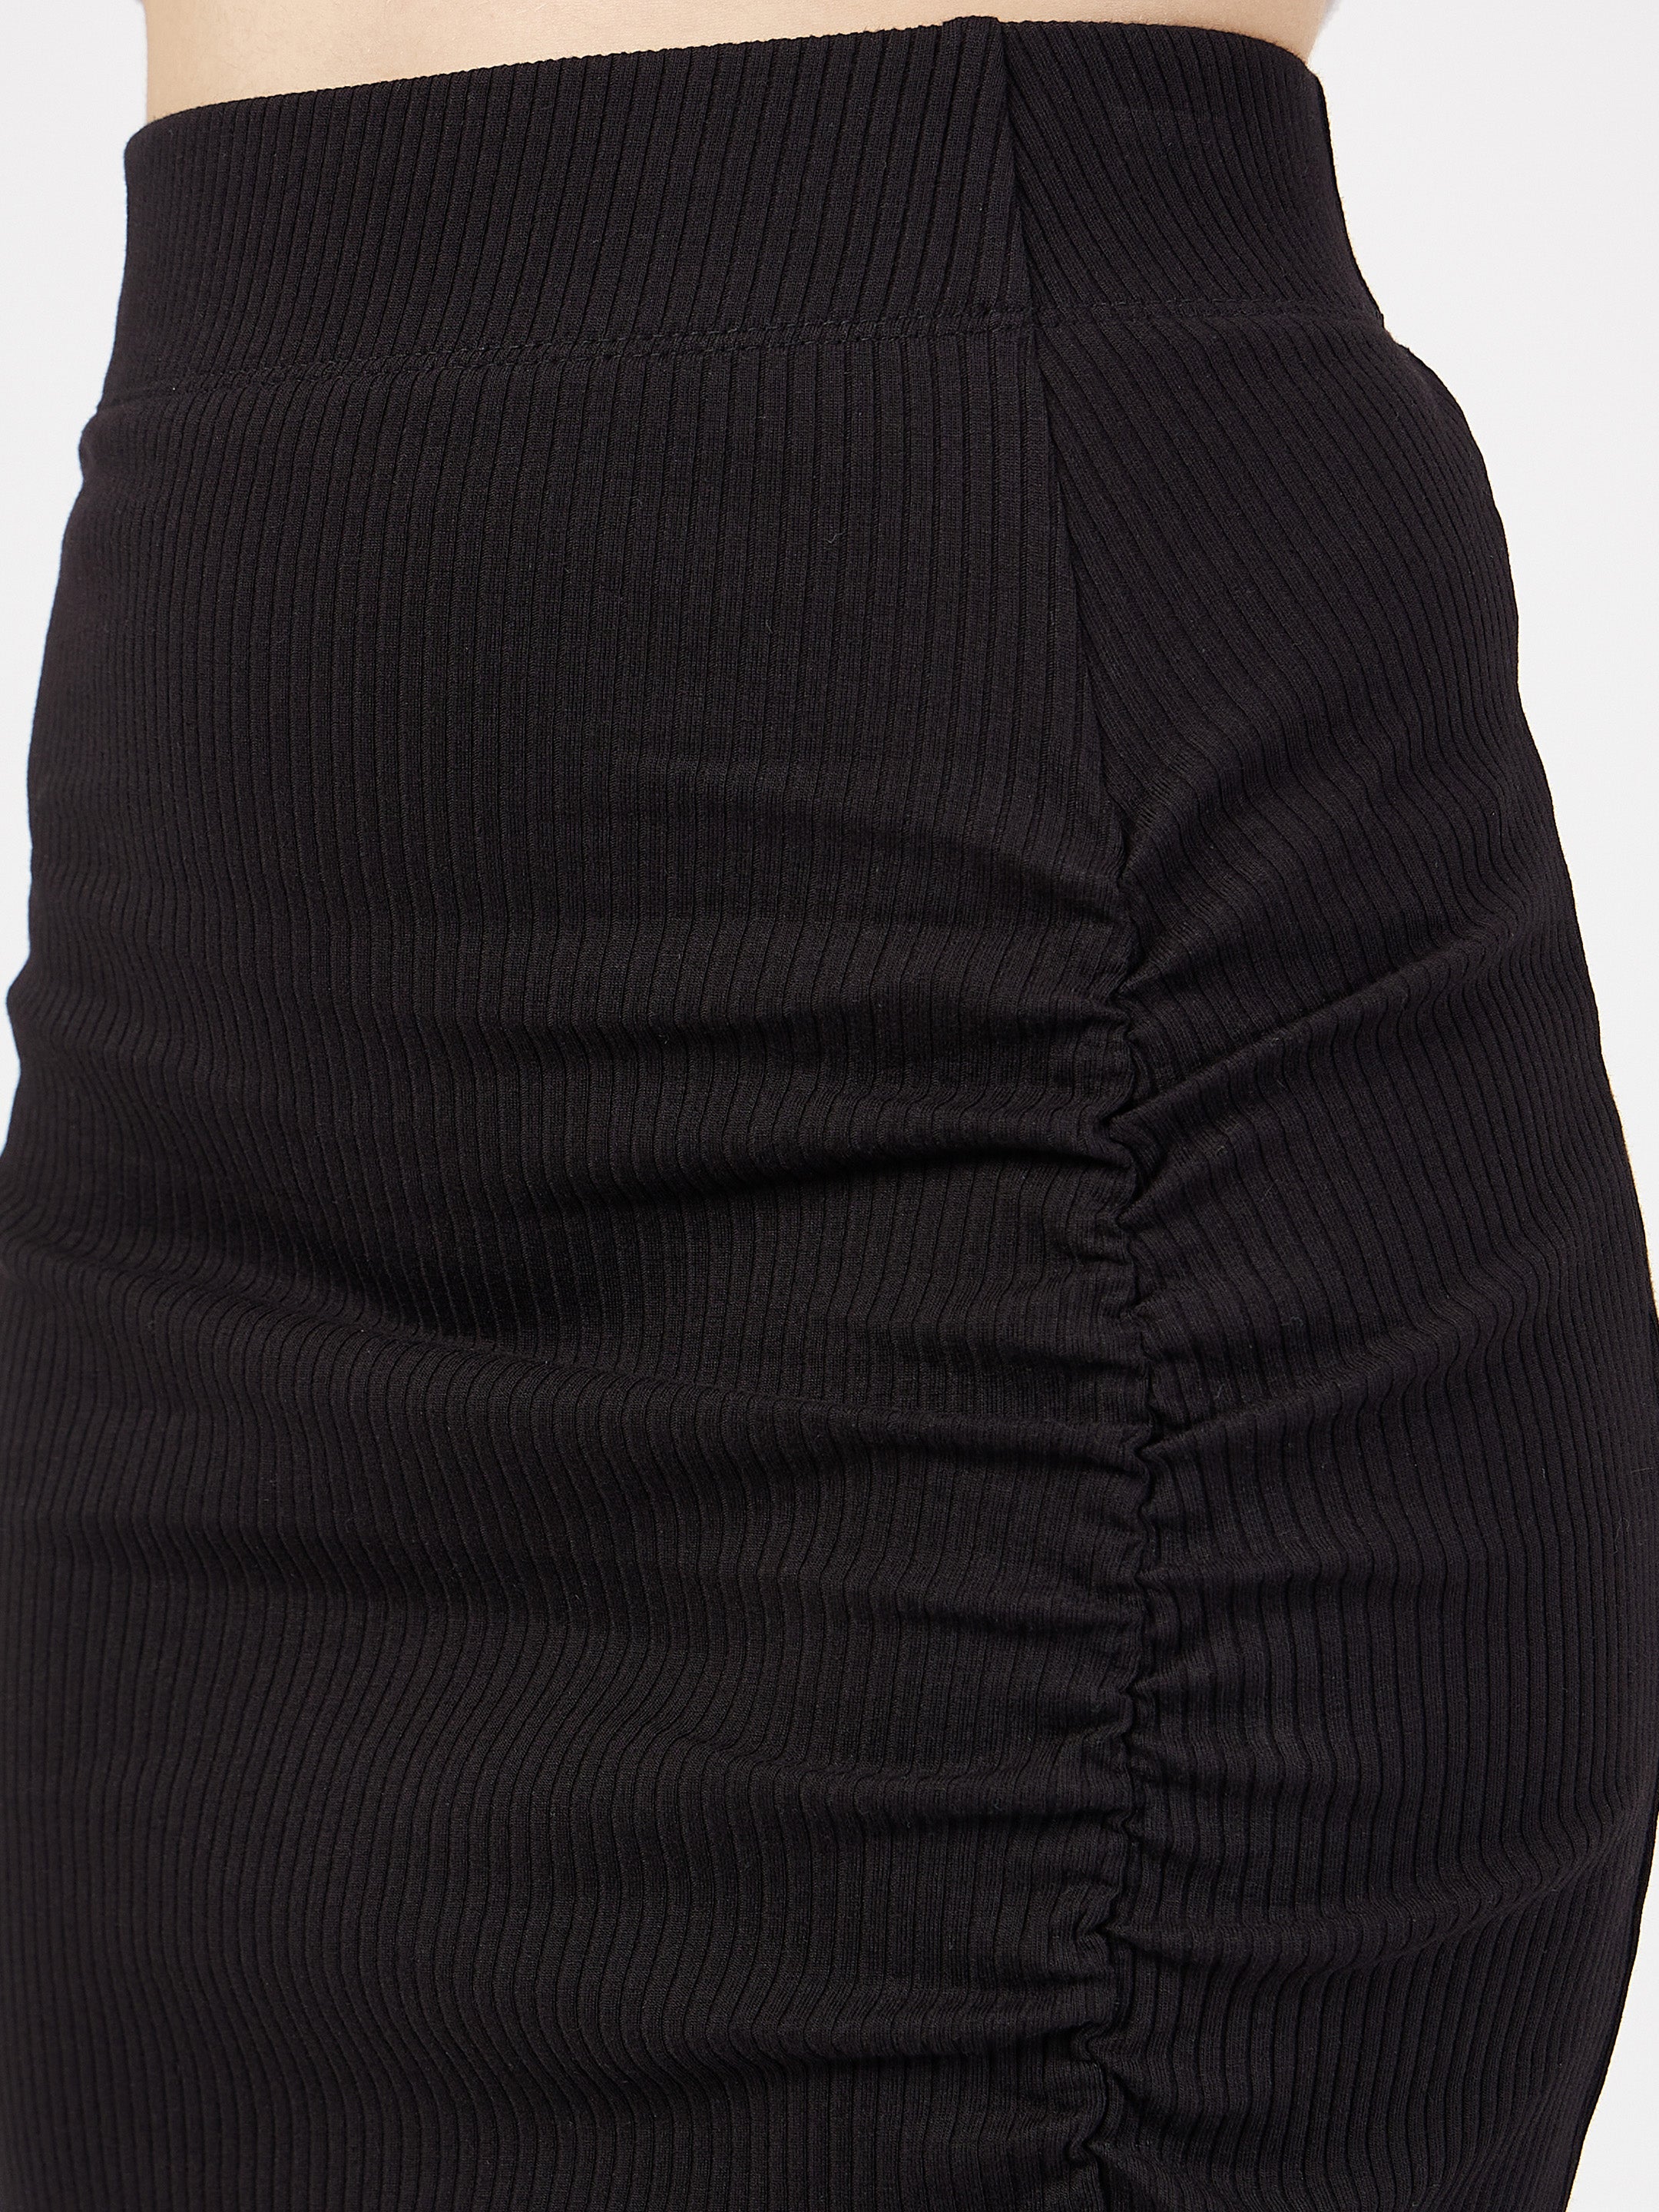 Women's Black Rib Front Ruched Midi Skirt - Lyush